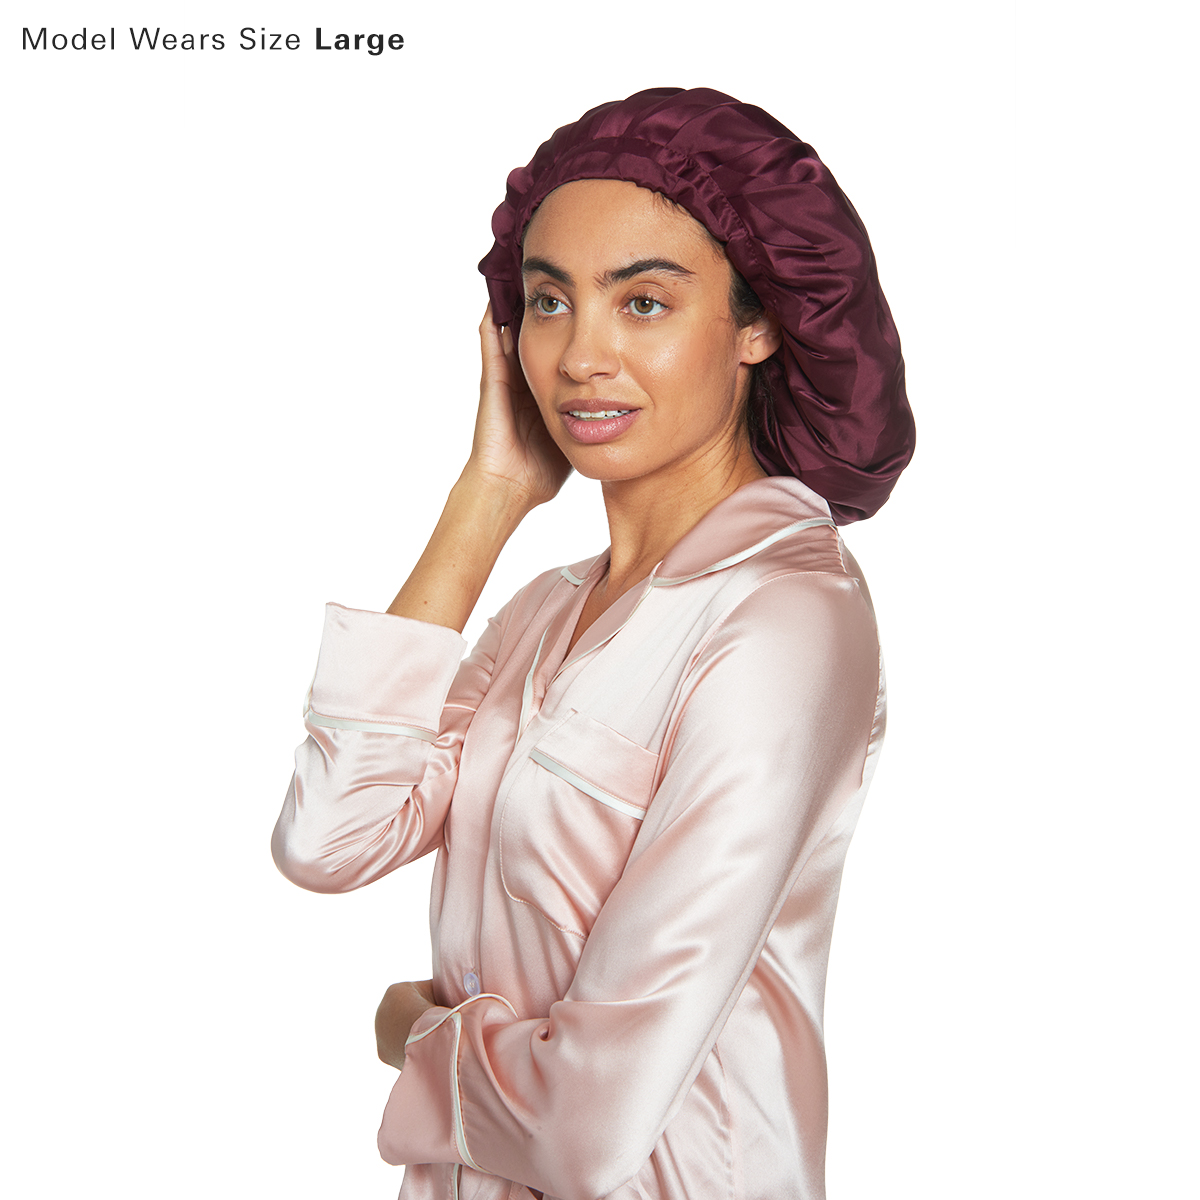 Silk Night Sleeping Cap Bonnet with Comfort Elastic Band - MYK Silk #color_burgundy strips